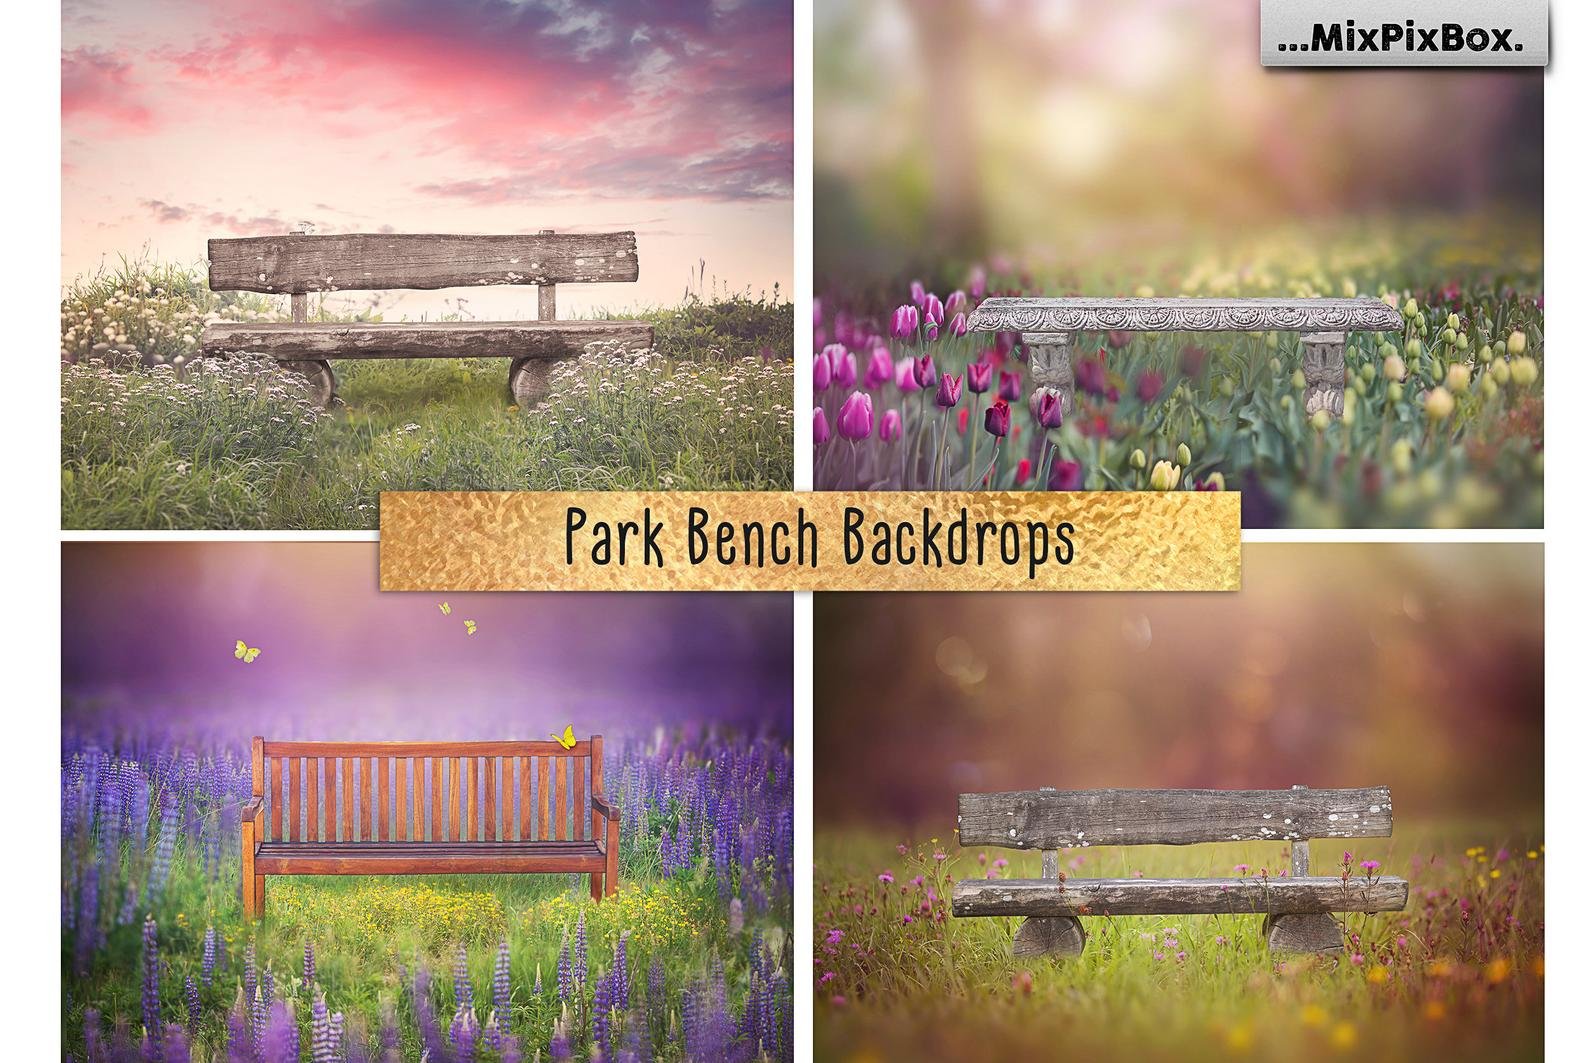 Park Bench Backdropscover image.